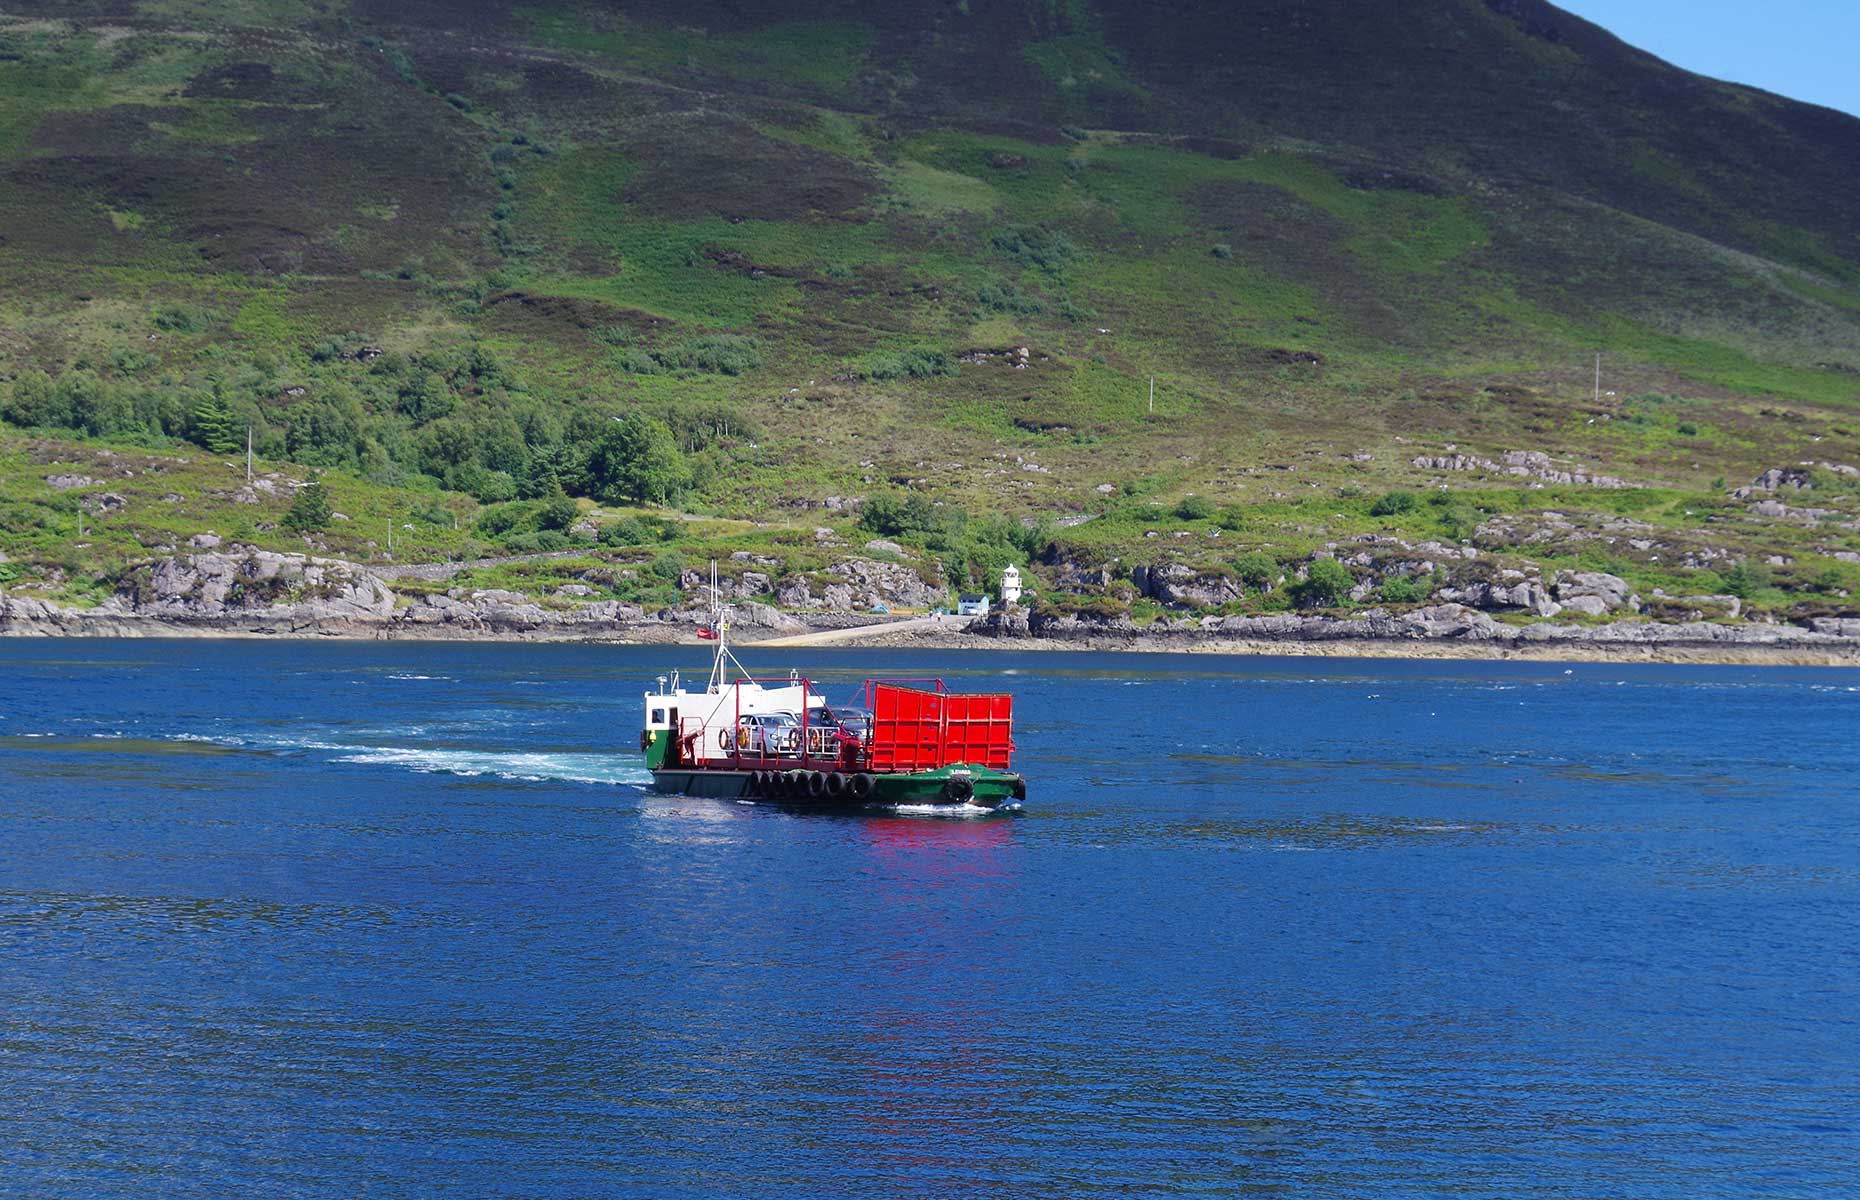 Glenelg ferry, Isle of Skye, Scotland (Images: Jacqueline Hofmeijer/Shutterstock)